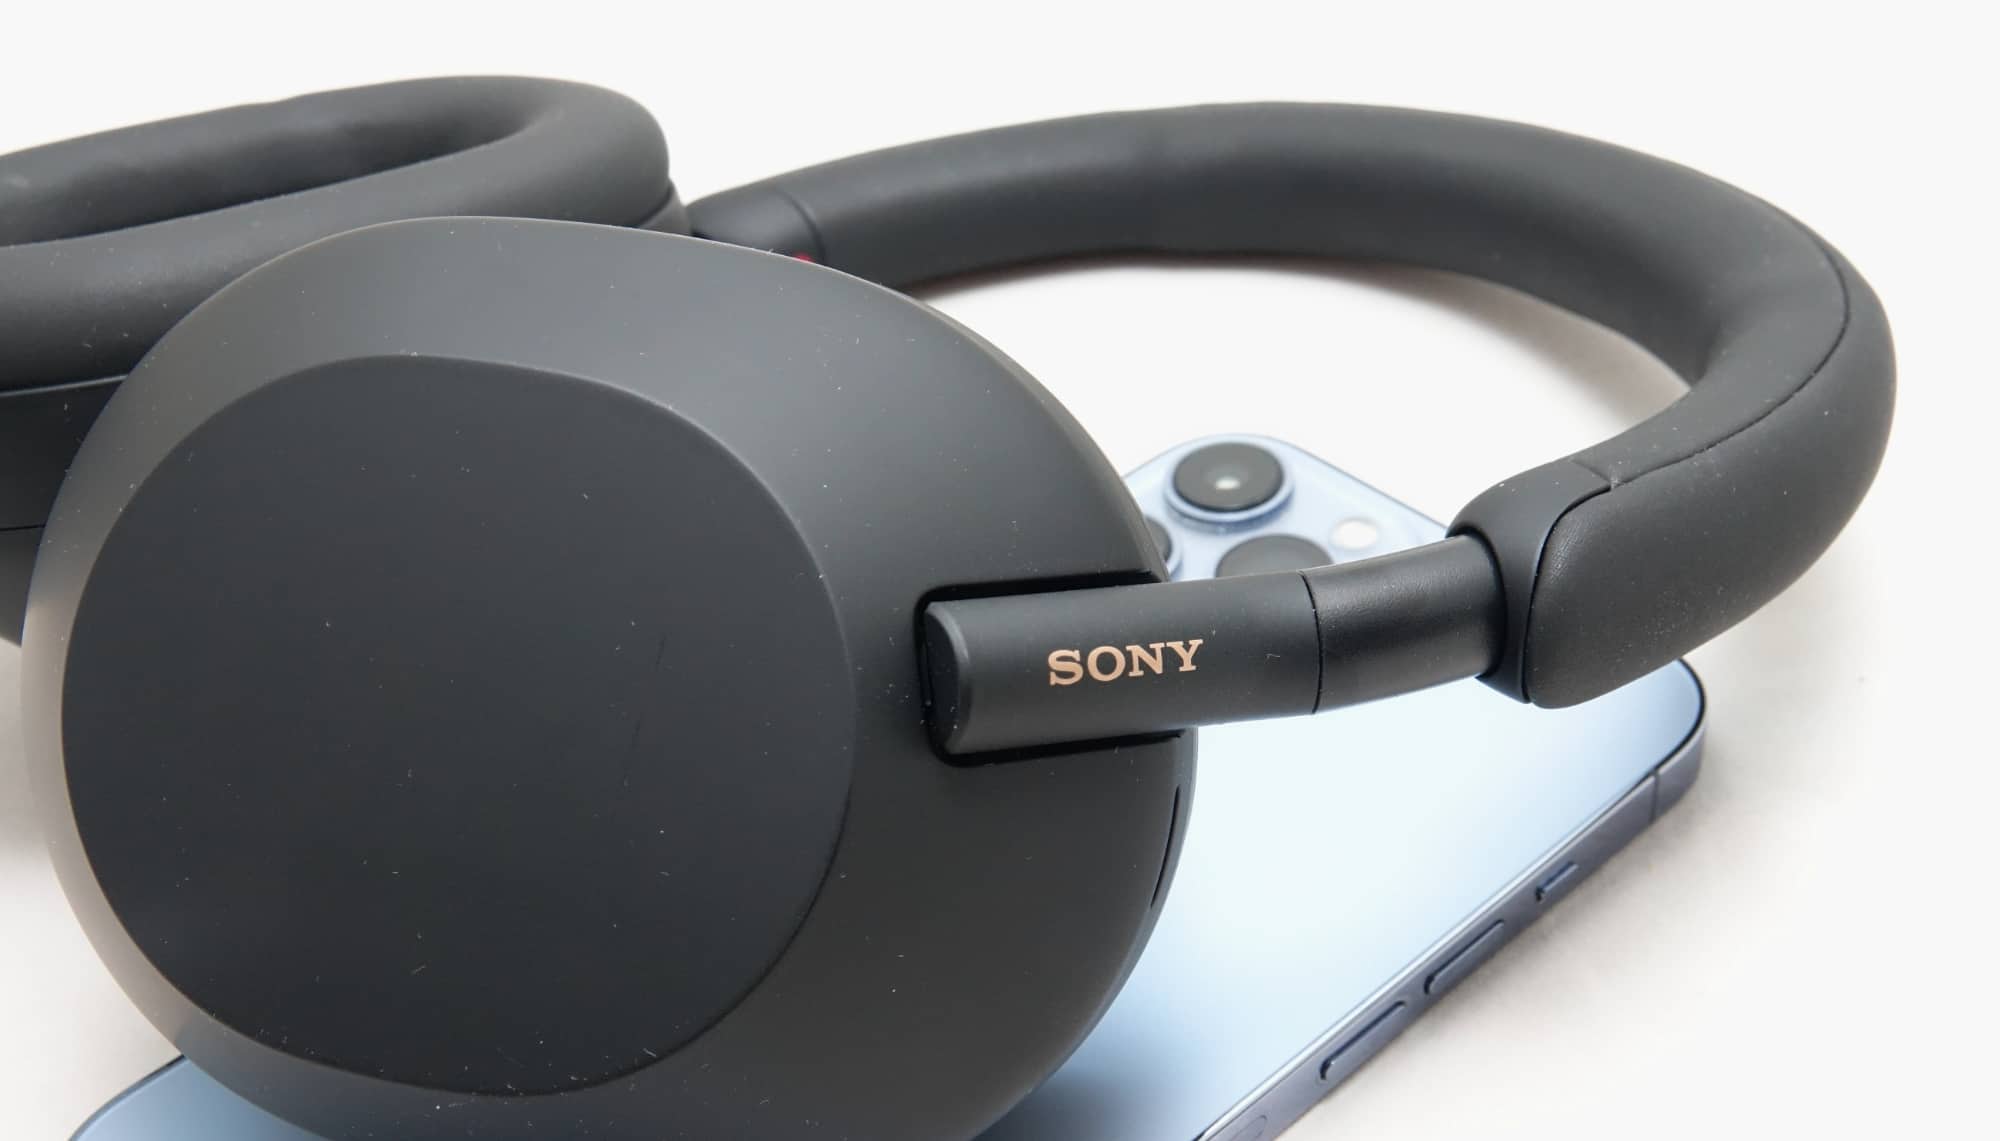 Review: Sony's XM5 headphones are excellent